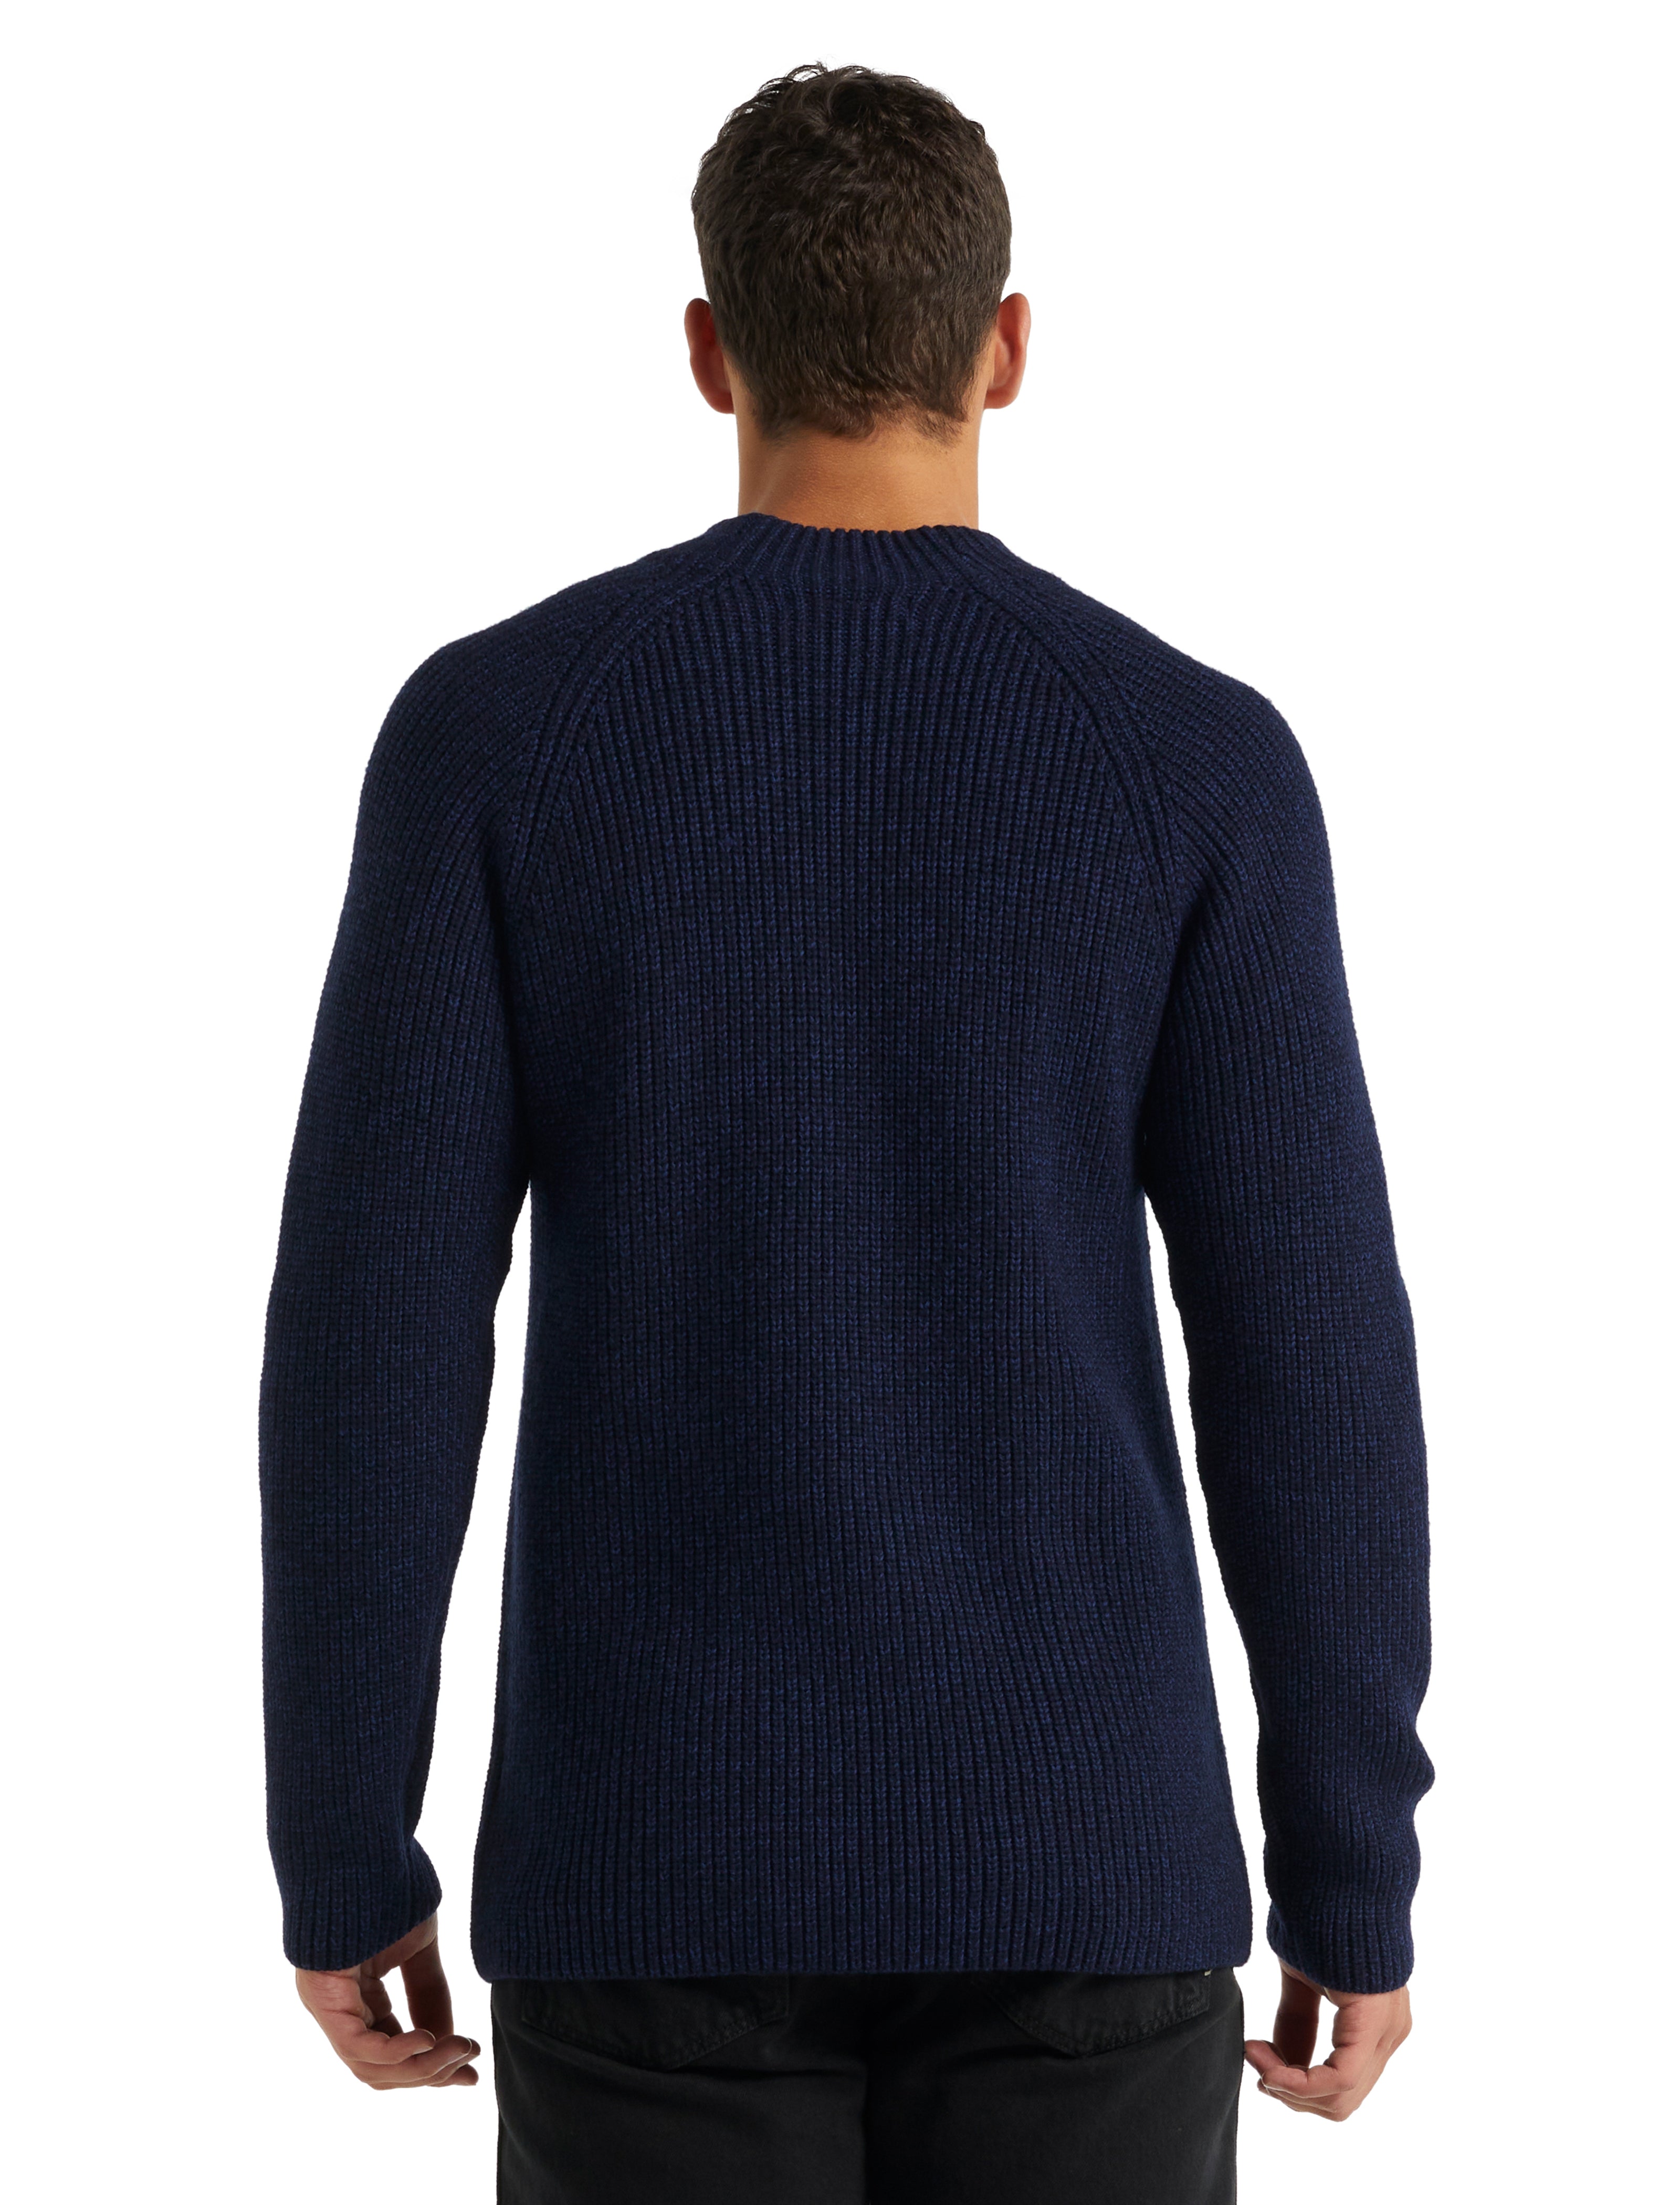 Icebreaker Hillock Funnel Neck Sweater (Men's) Midnight Navy/Royal Navy